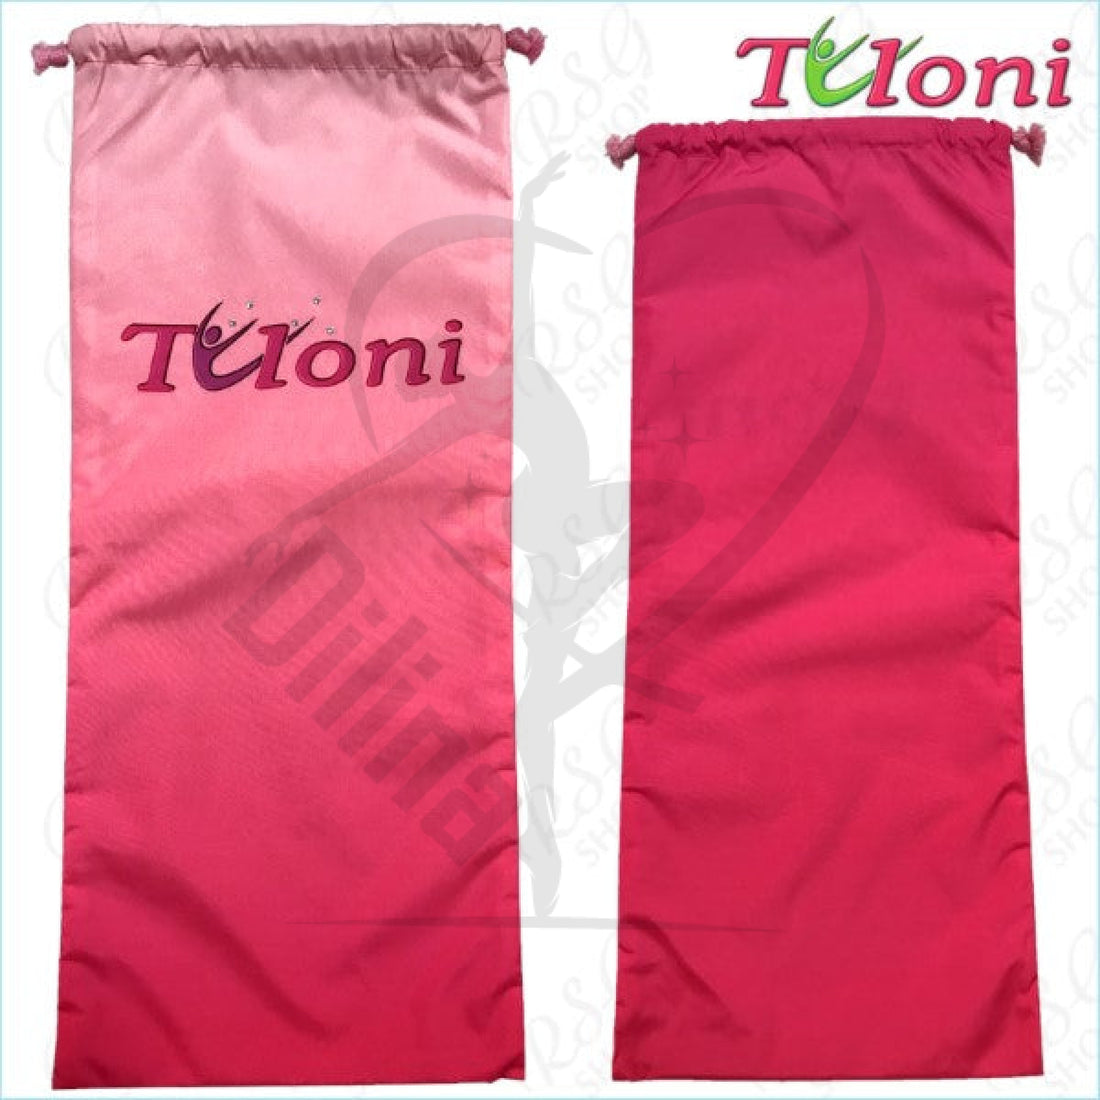 Tuloni Clubs Holder Light Pink X Holders